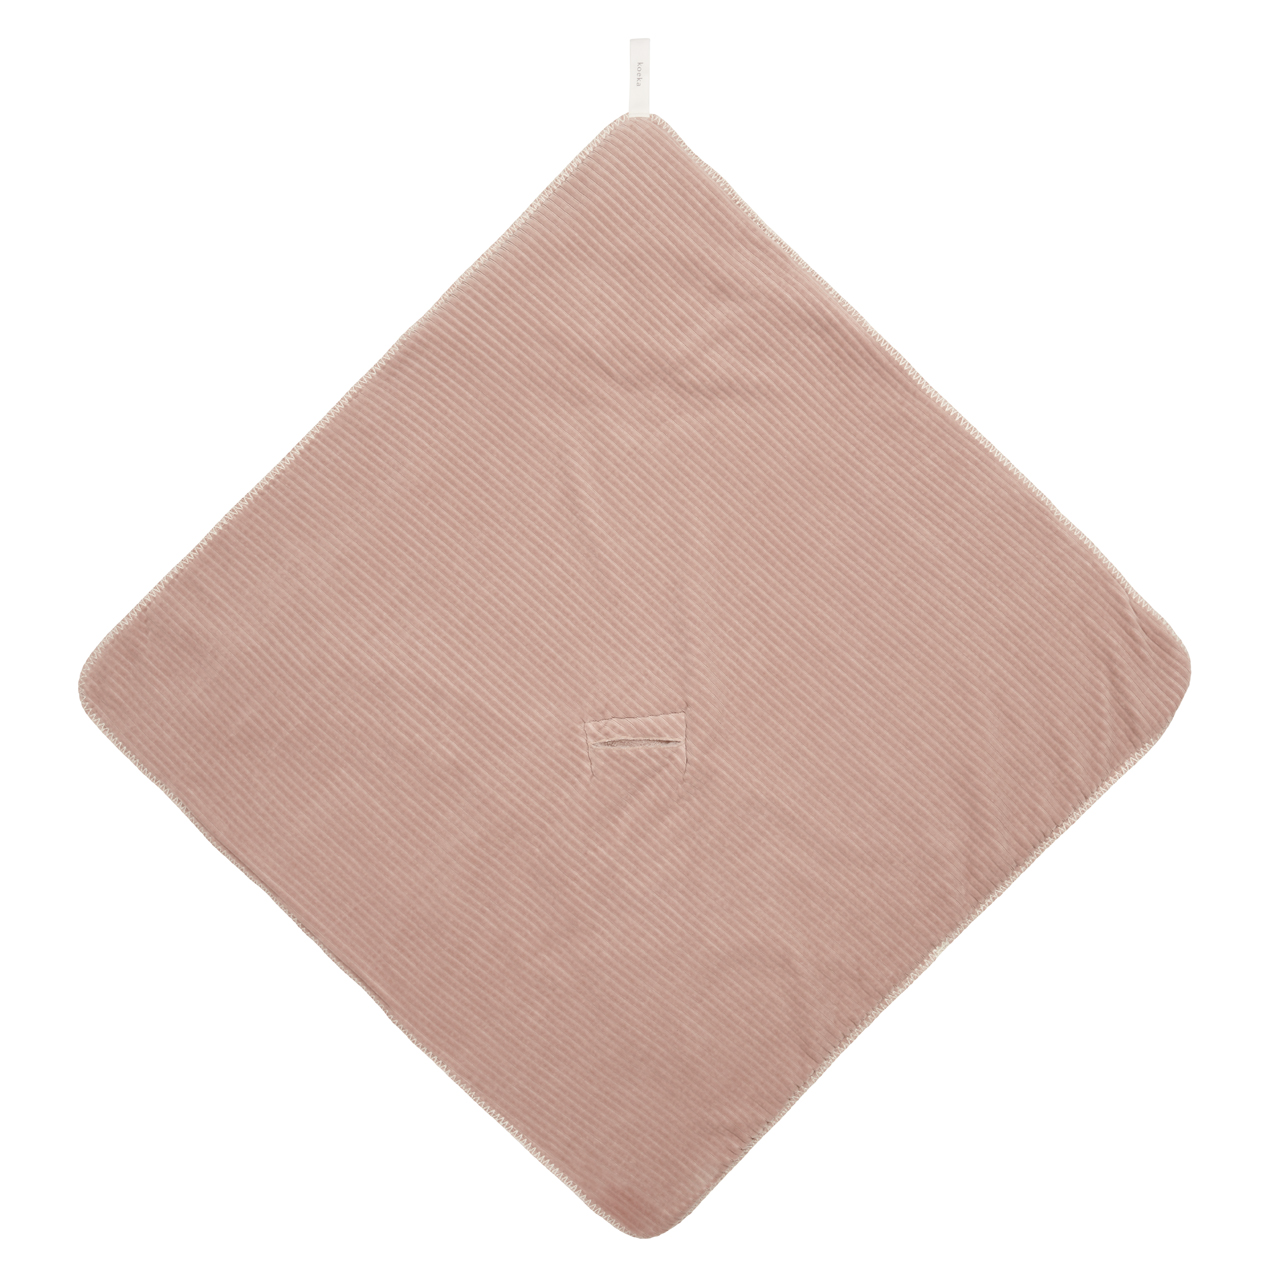 Wrap towel teddy Vik grey pink